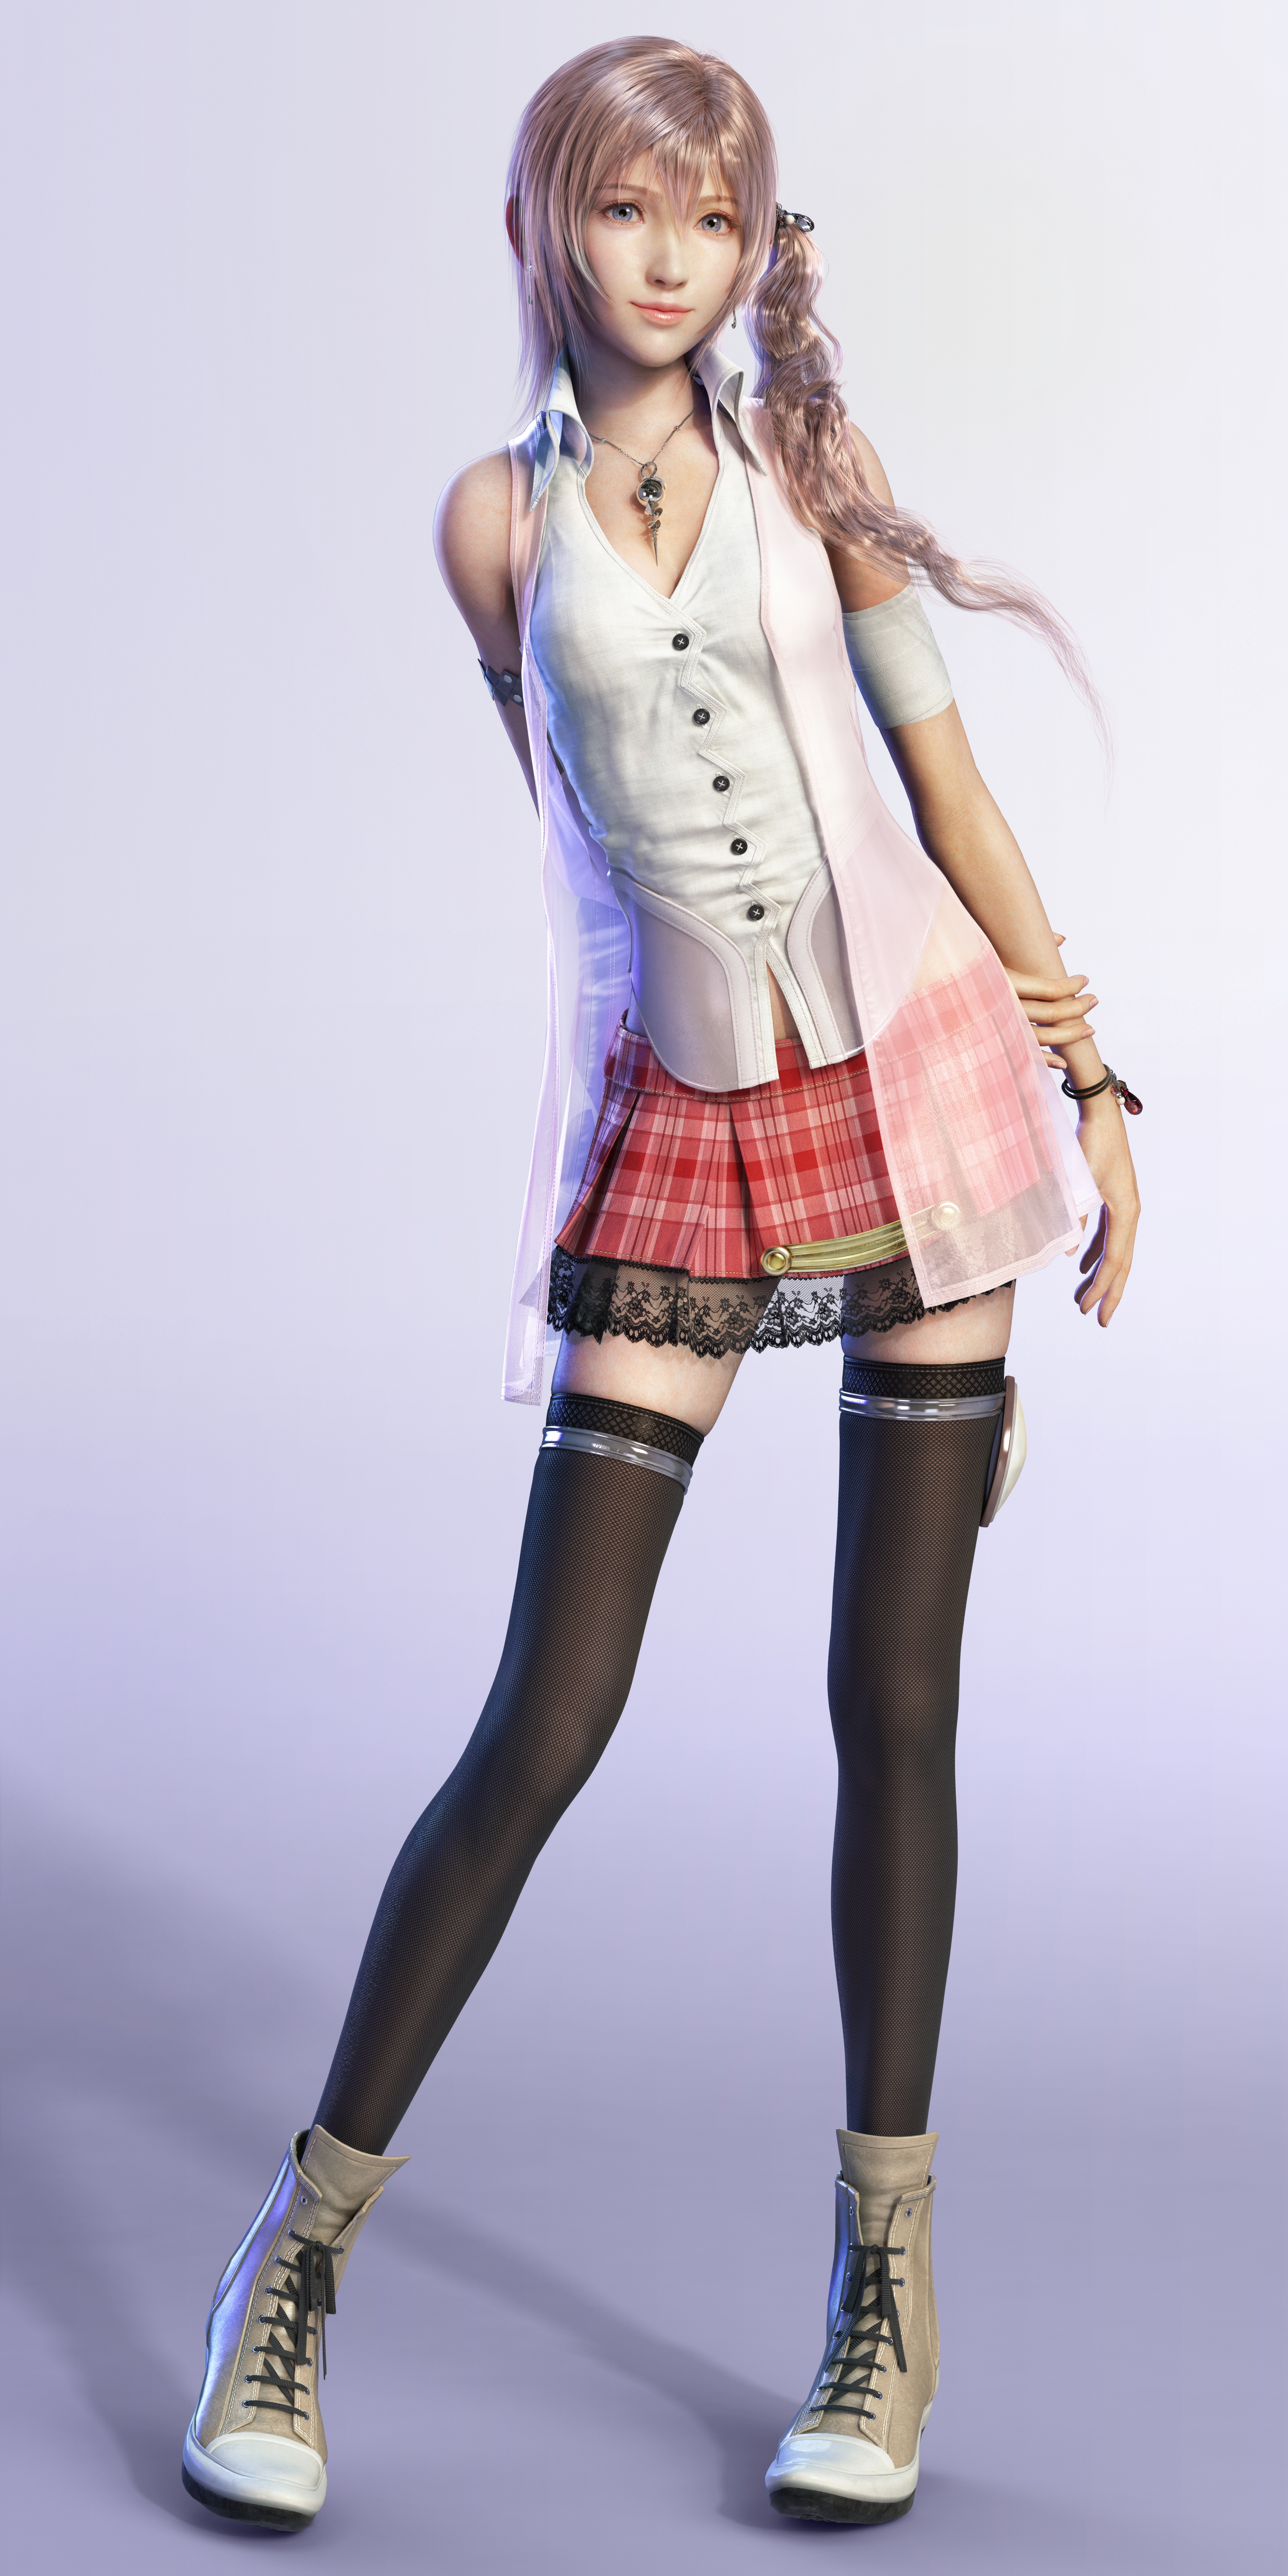 Final Fantasy Xiii Serah Farron Portrait Display Looking At Viewer Smiling Video Game Girls Video Ga 3500x7000